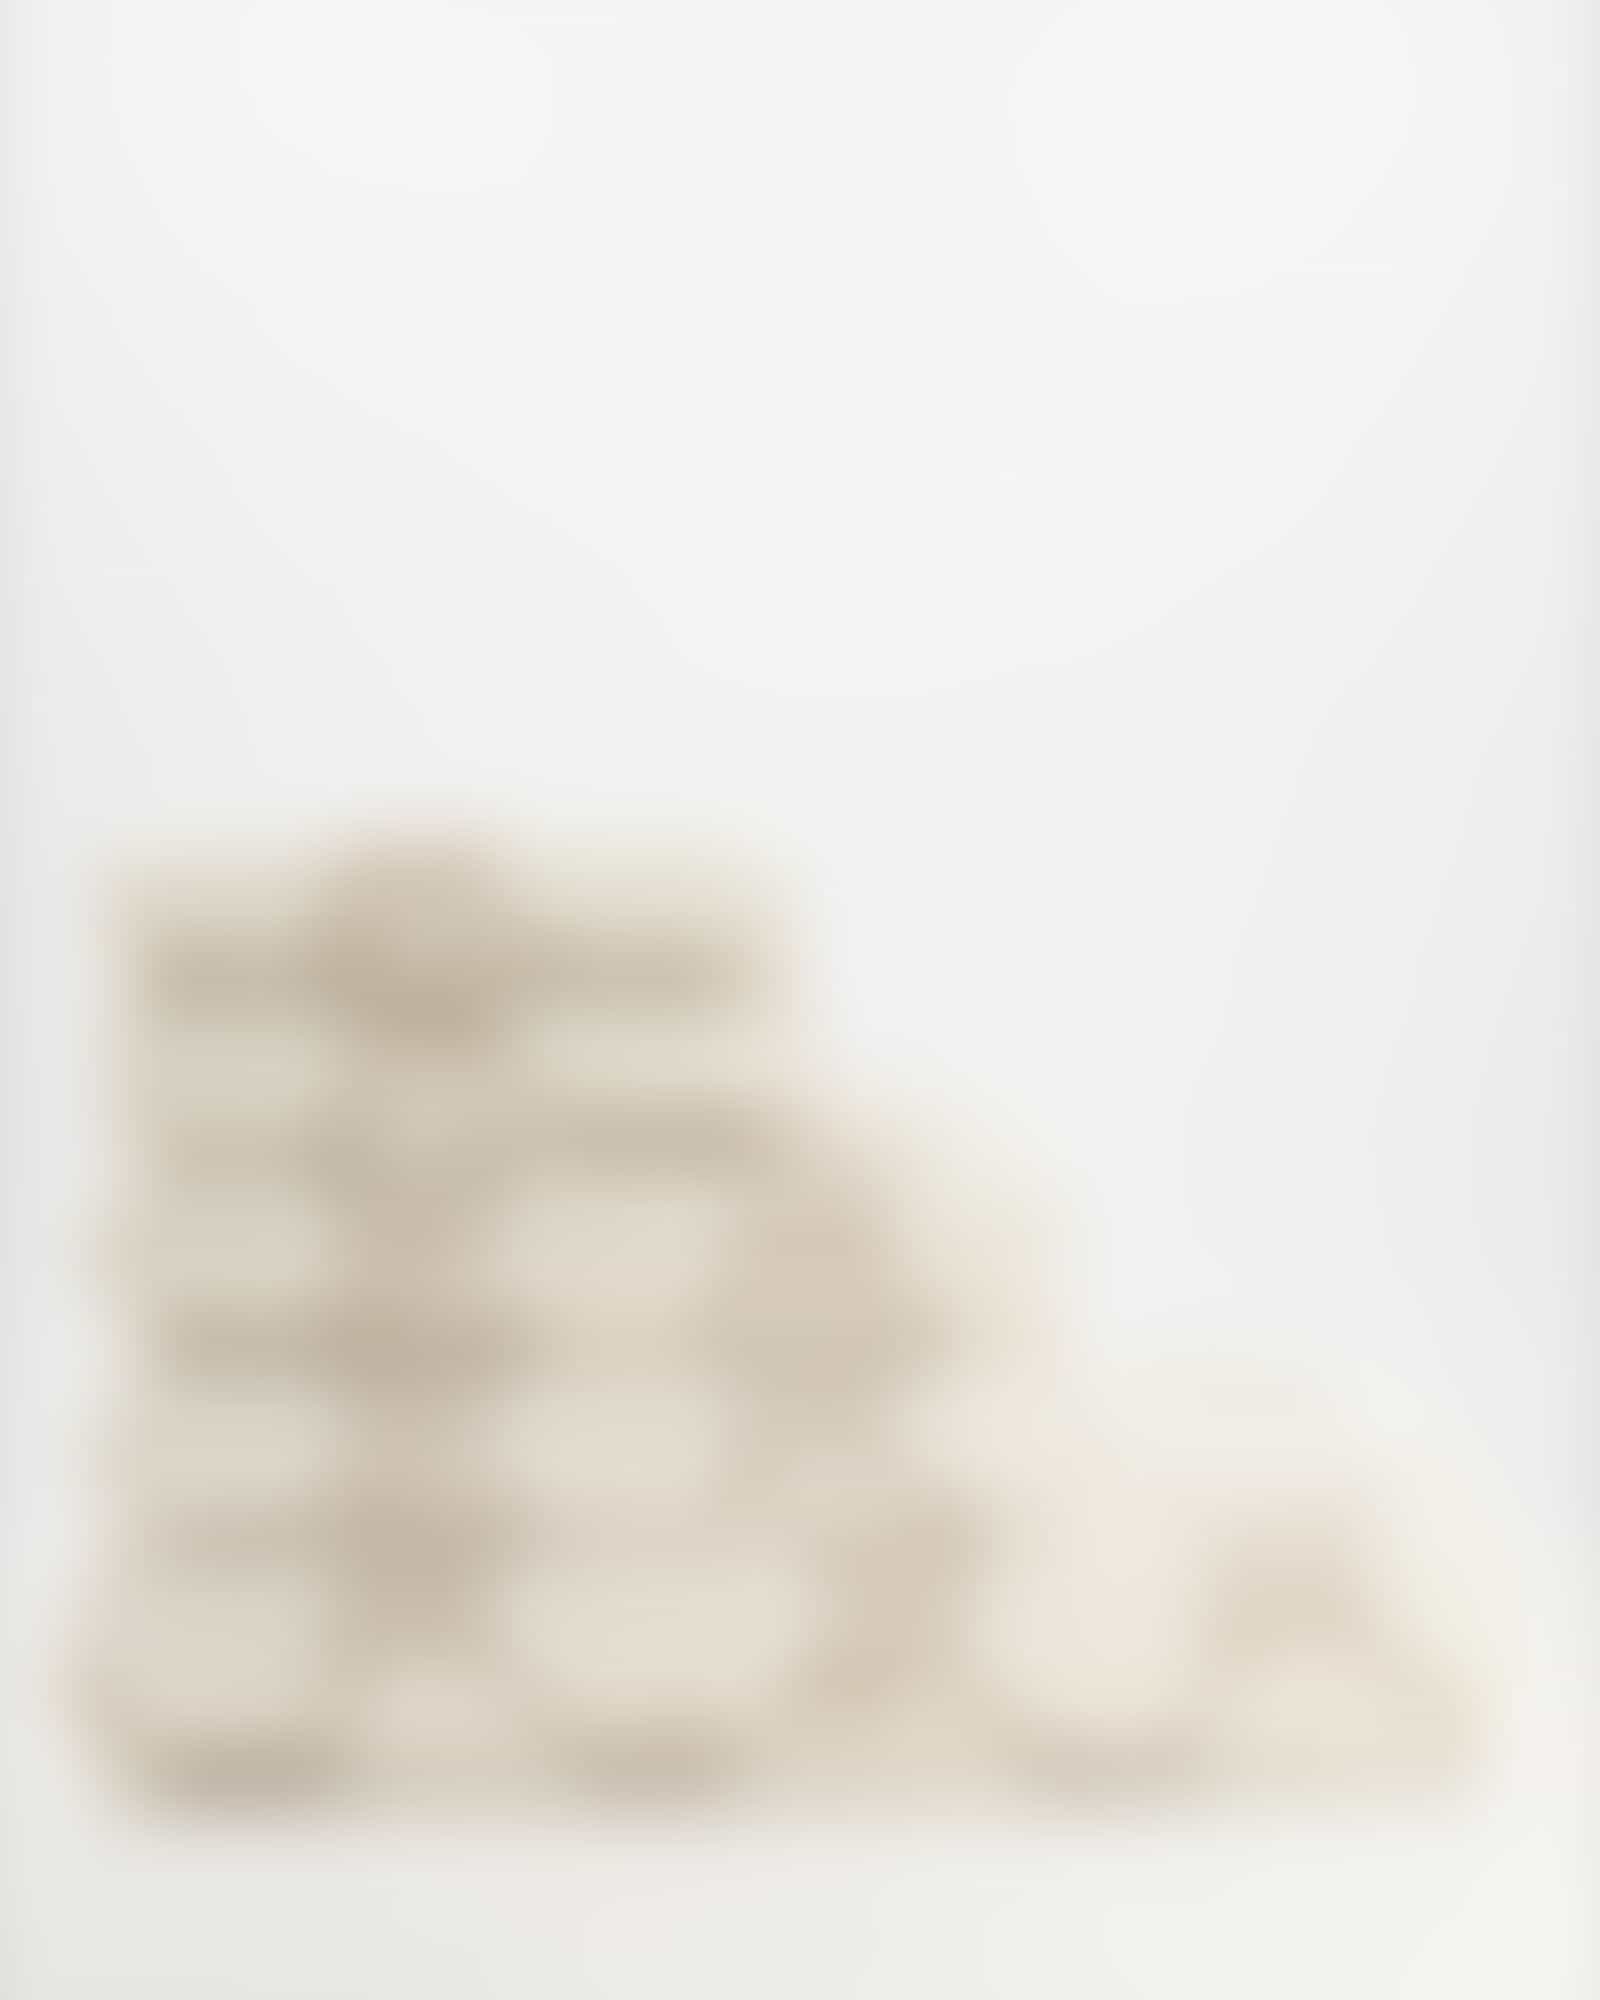 JOOP! Classic - Cornflower 1611 - Farbe: Creme - 36 - Duschtuch 80x150 cm